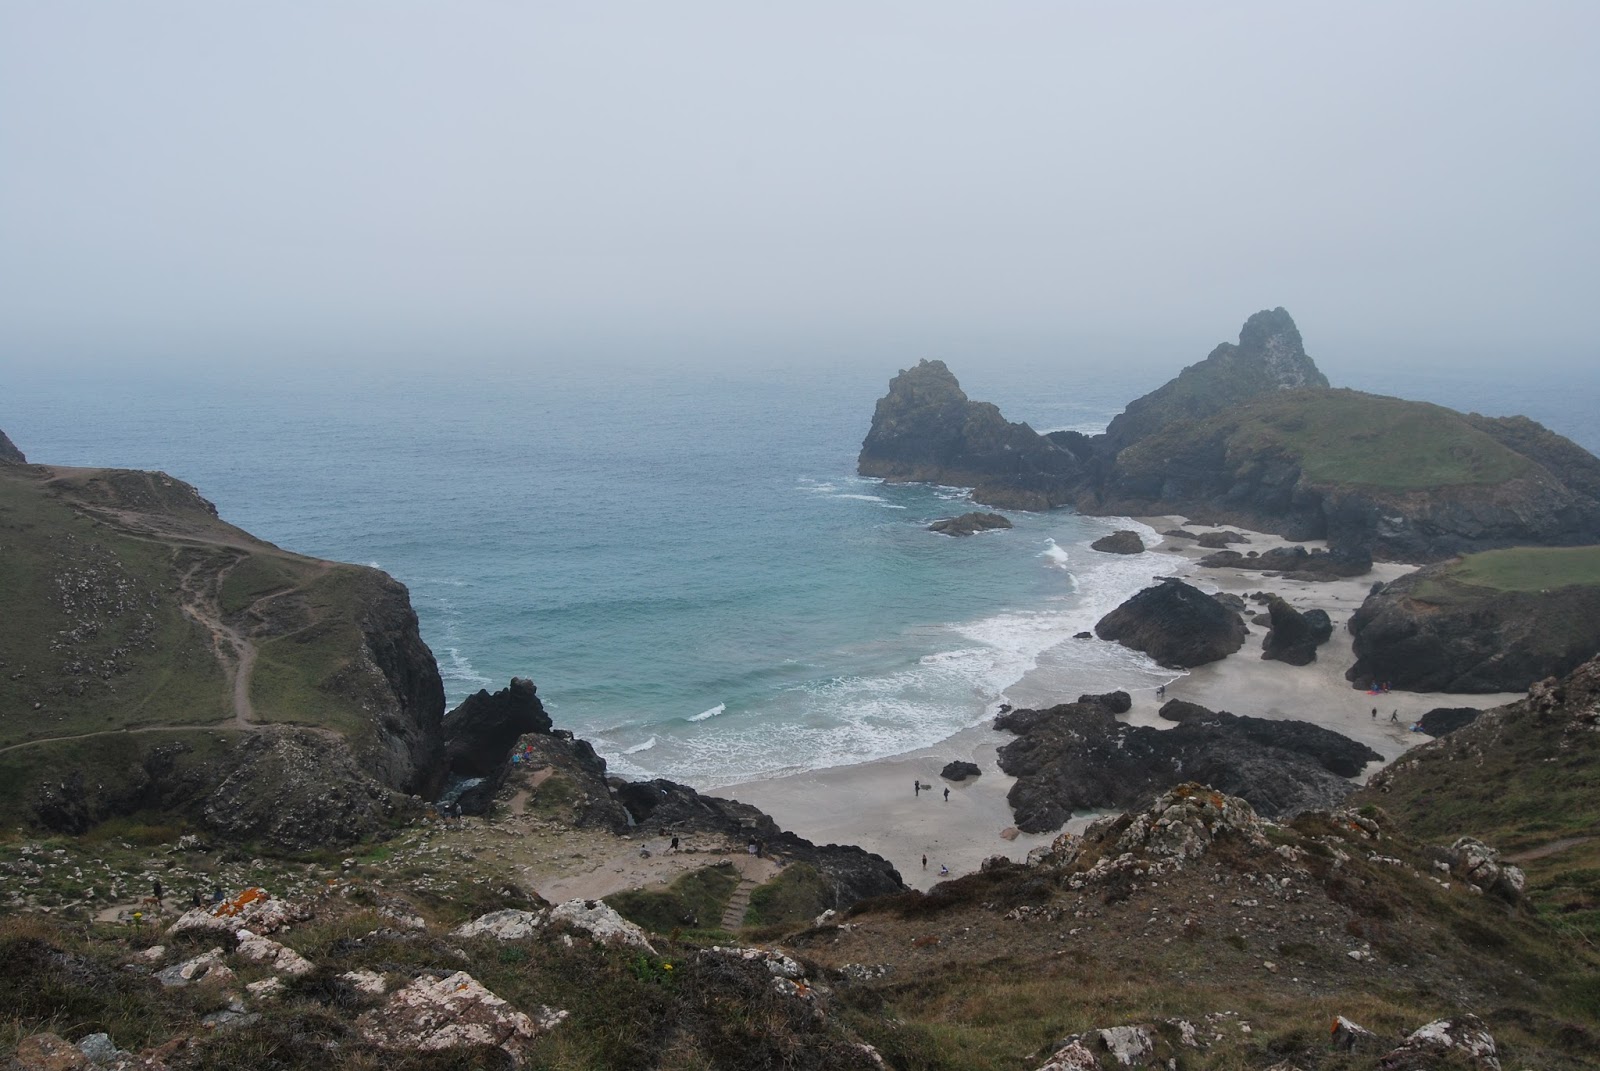 Cornish Tales - Beautiful Kynance Cove, photos by modern bric a brac